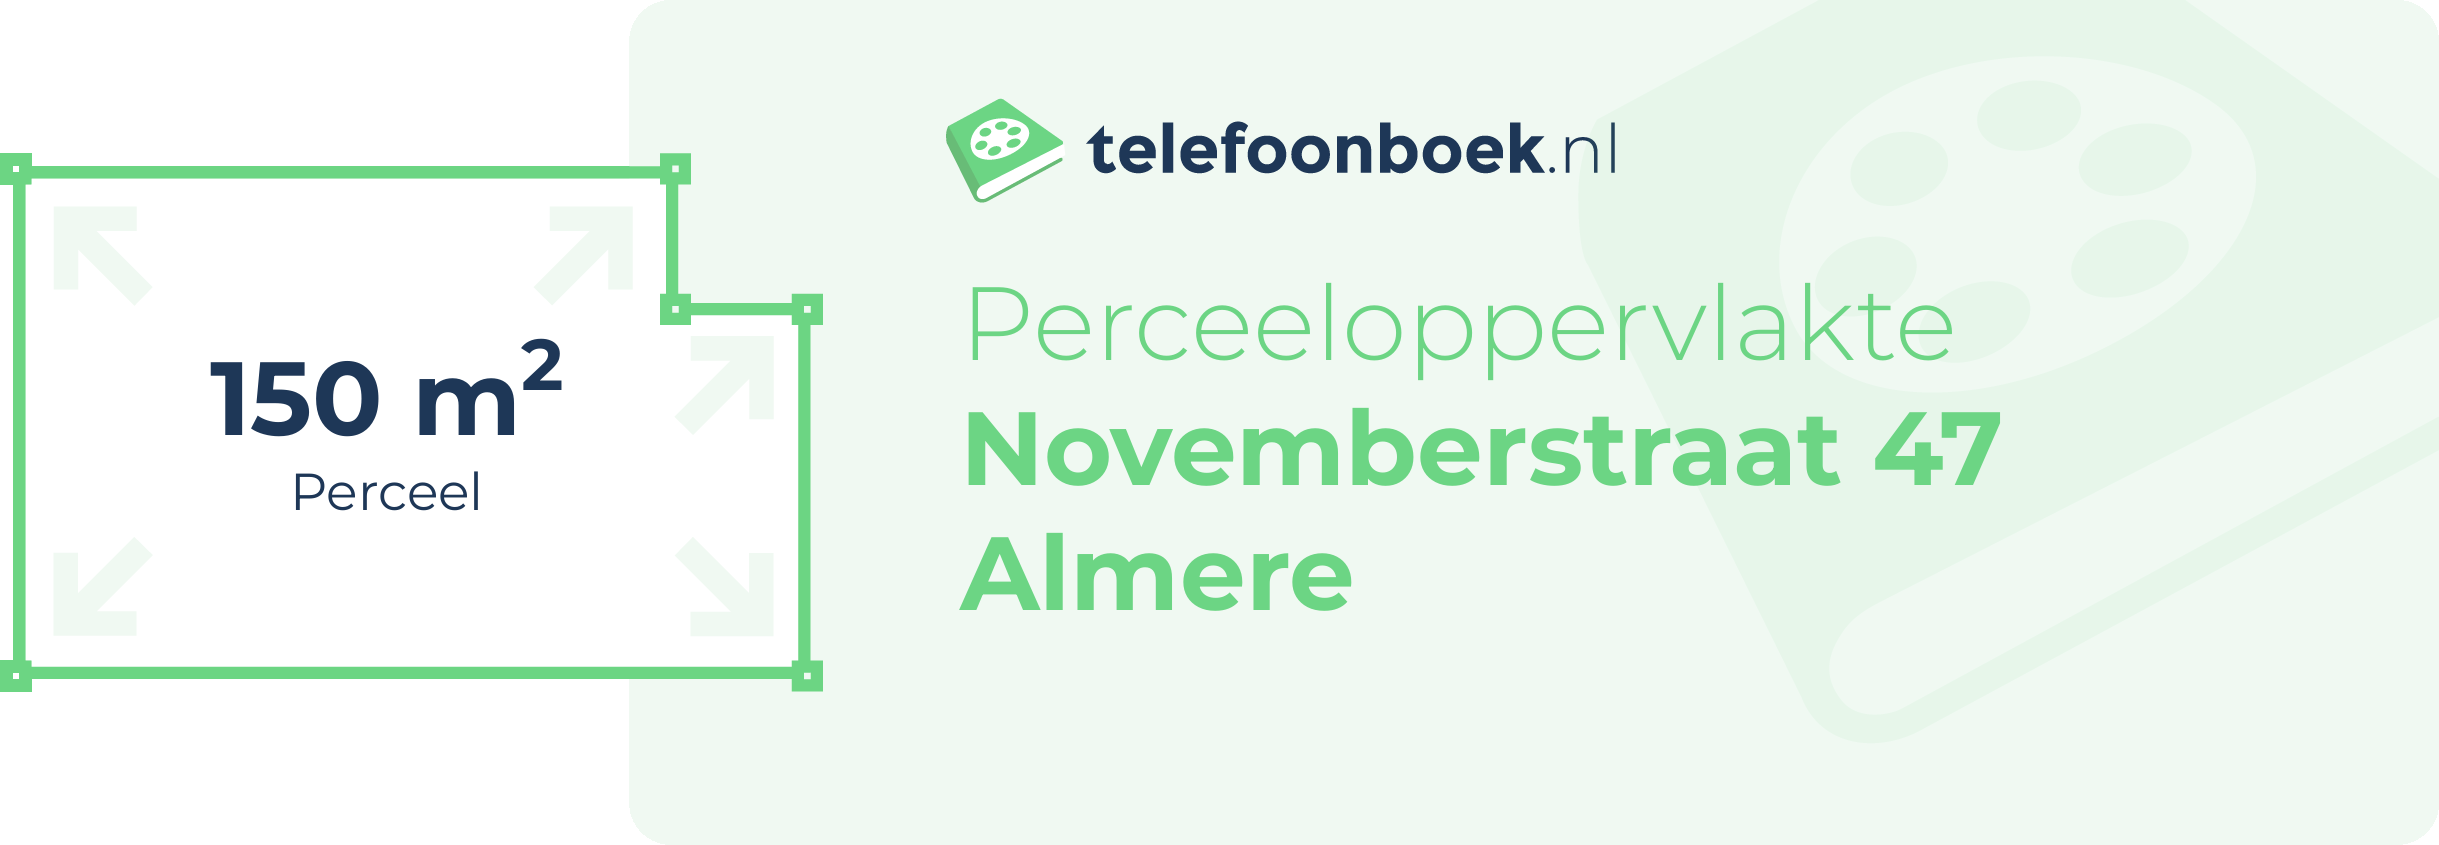 Perceeloppervlakte Novemberstraat 47 Almere